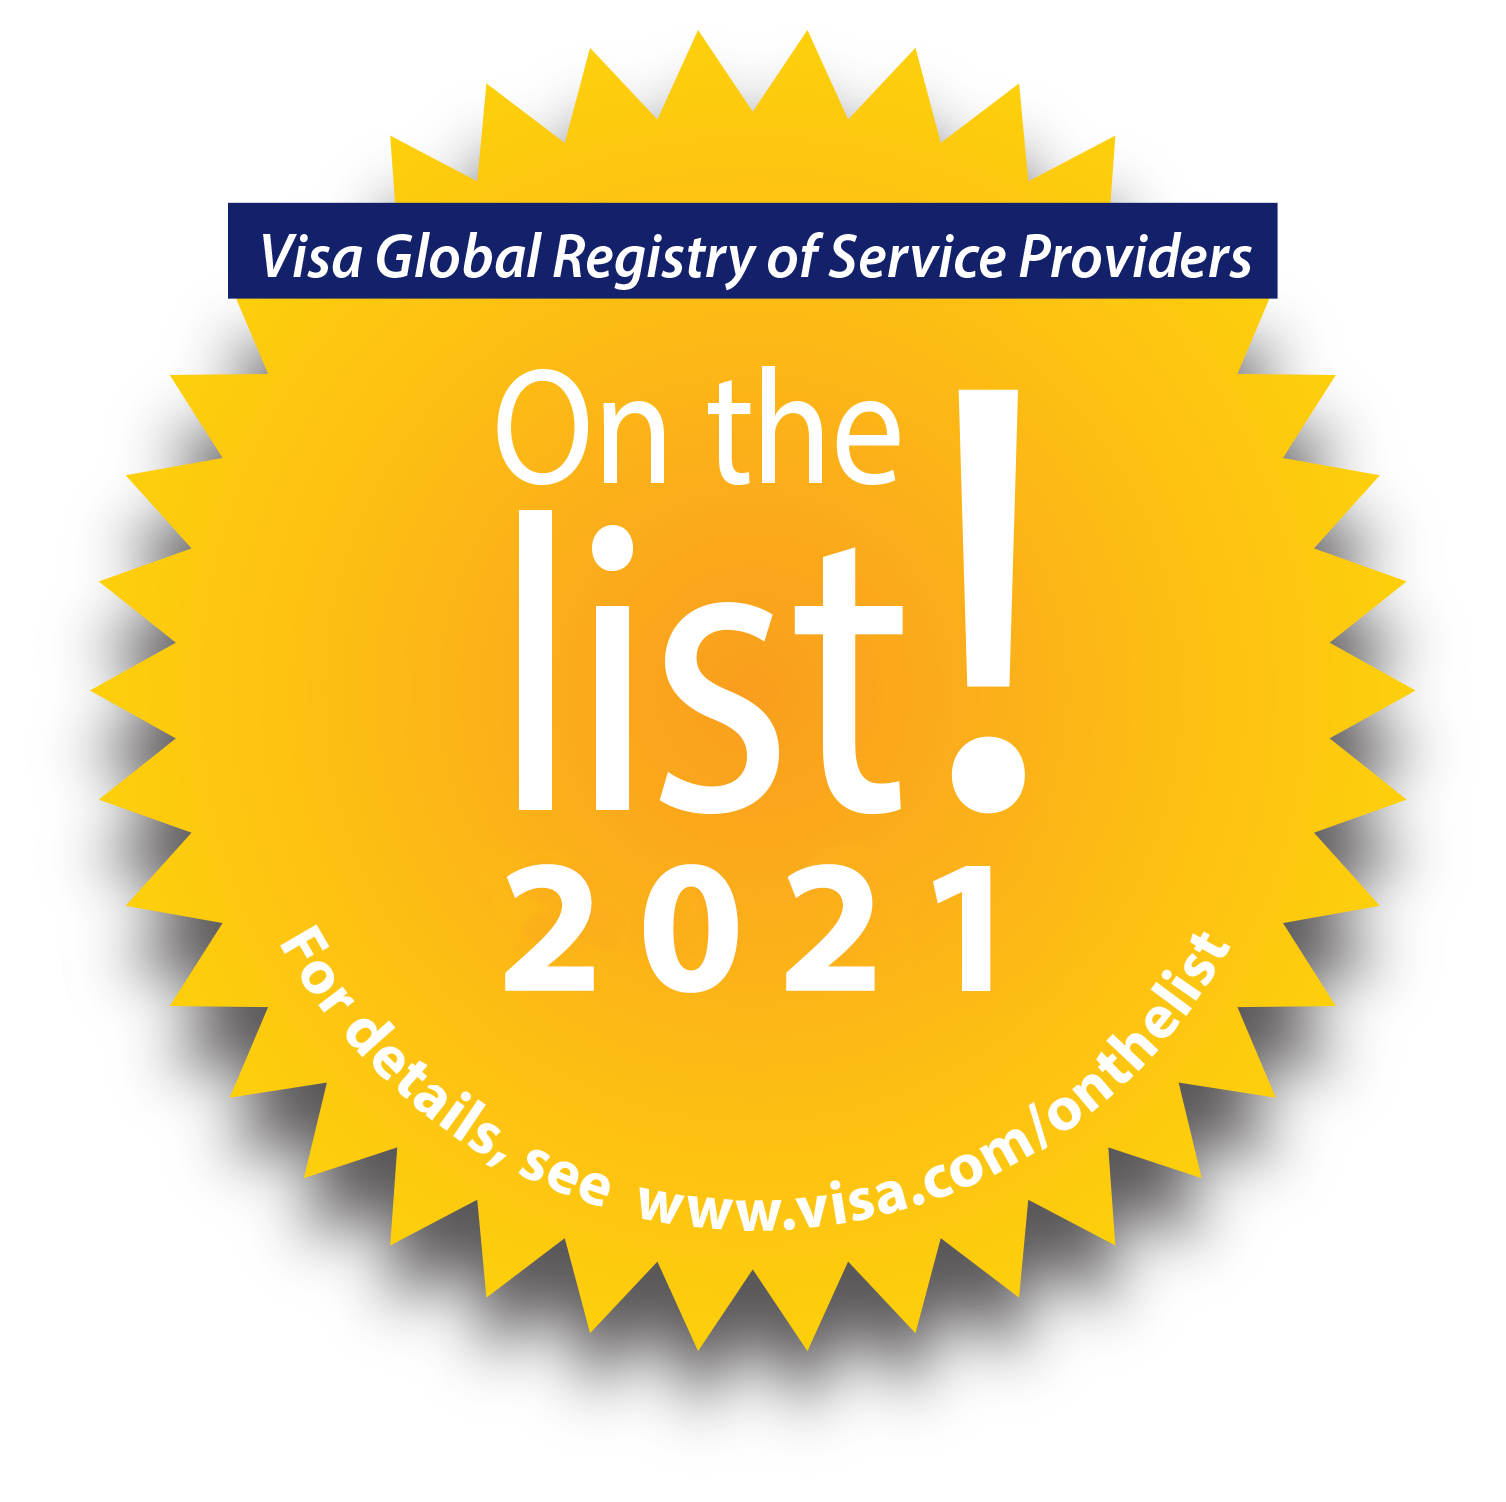 In 2021, OmegaFi made Visa Global Registry's list of service providers.